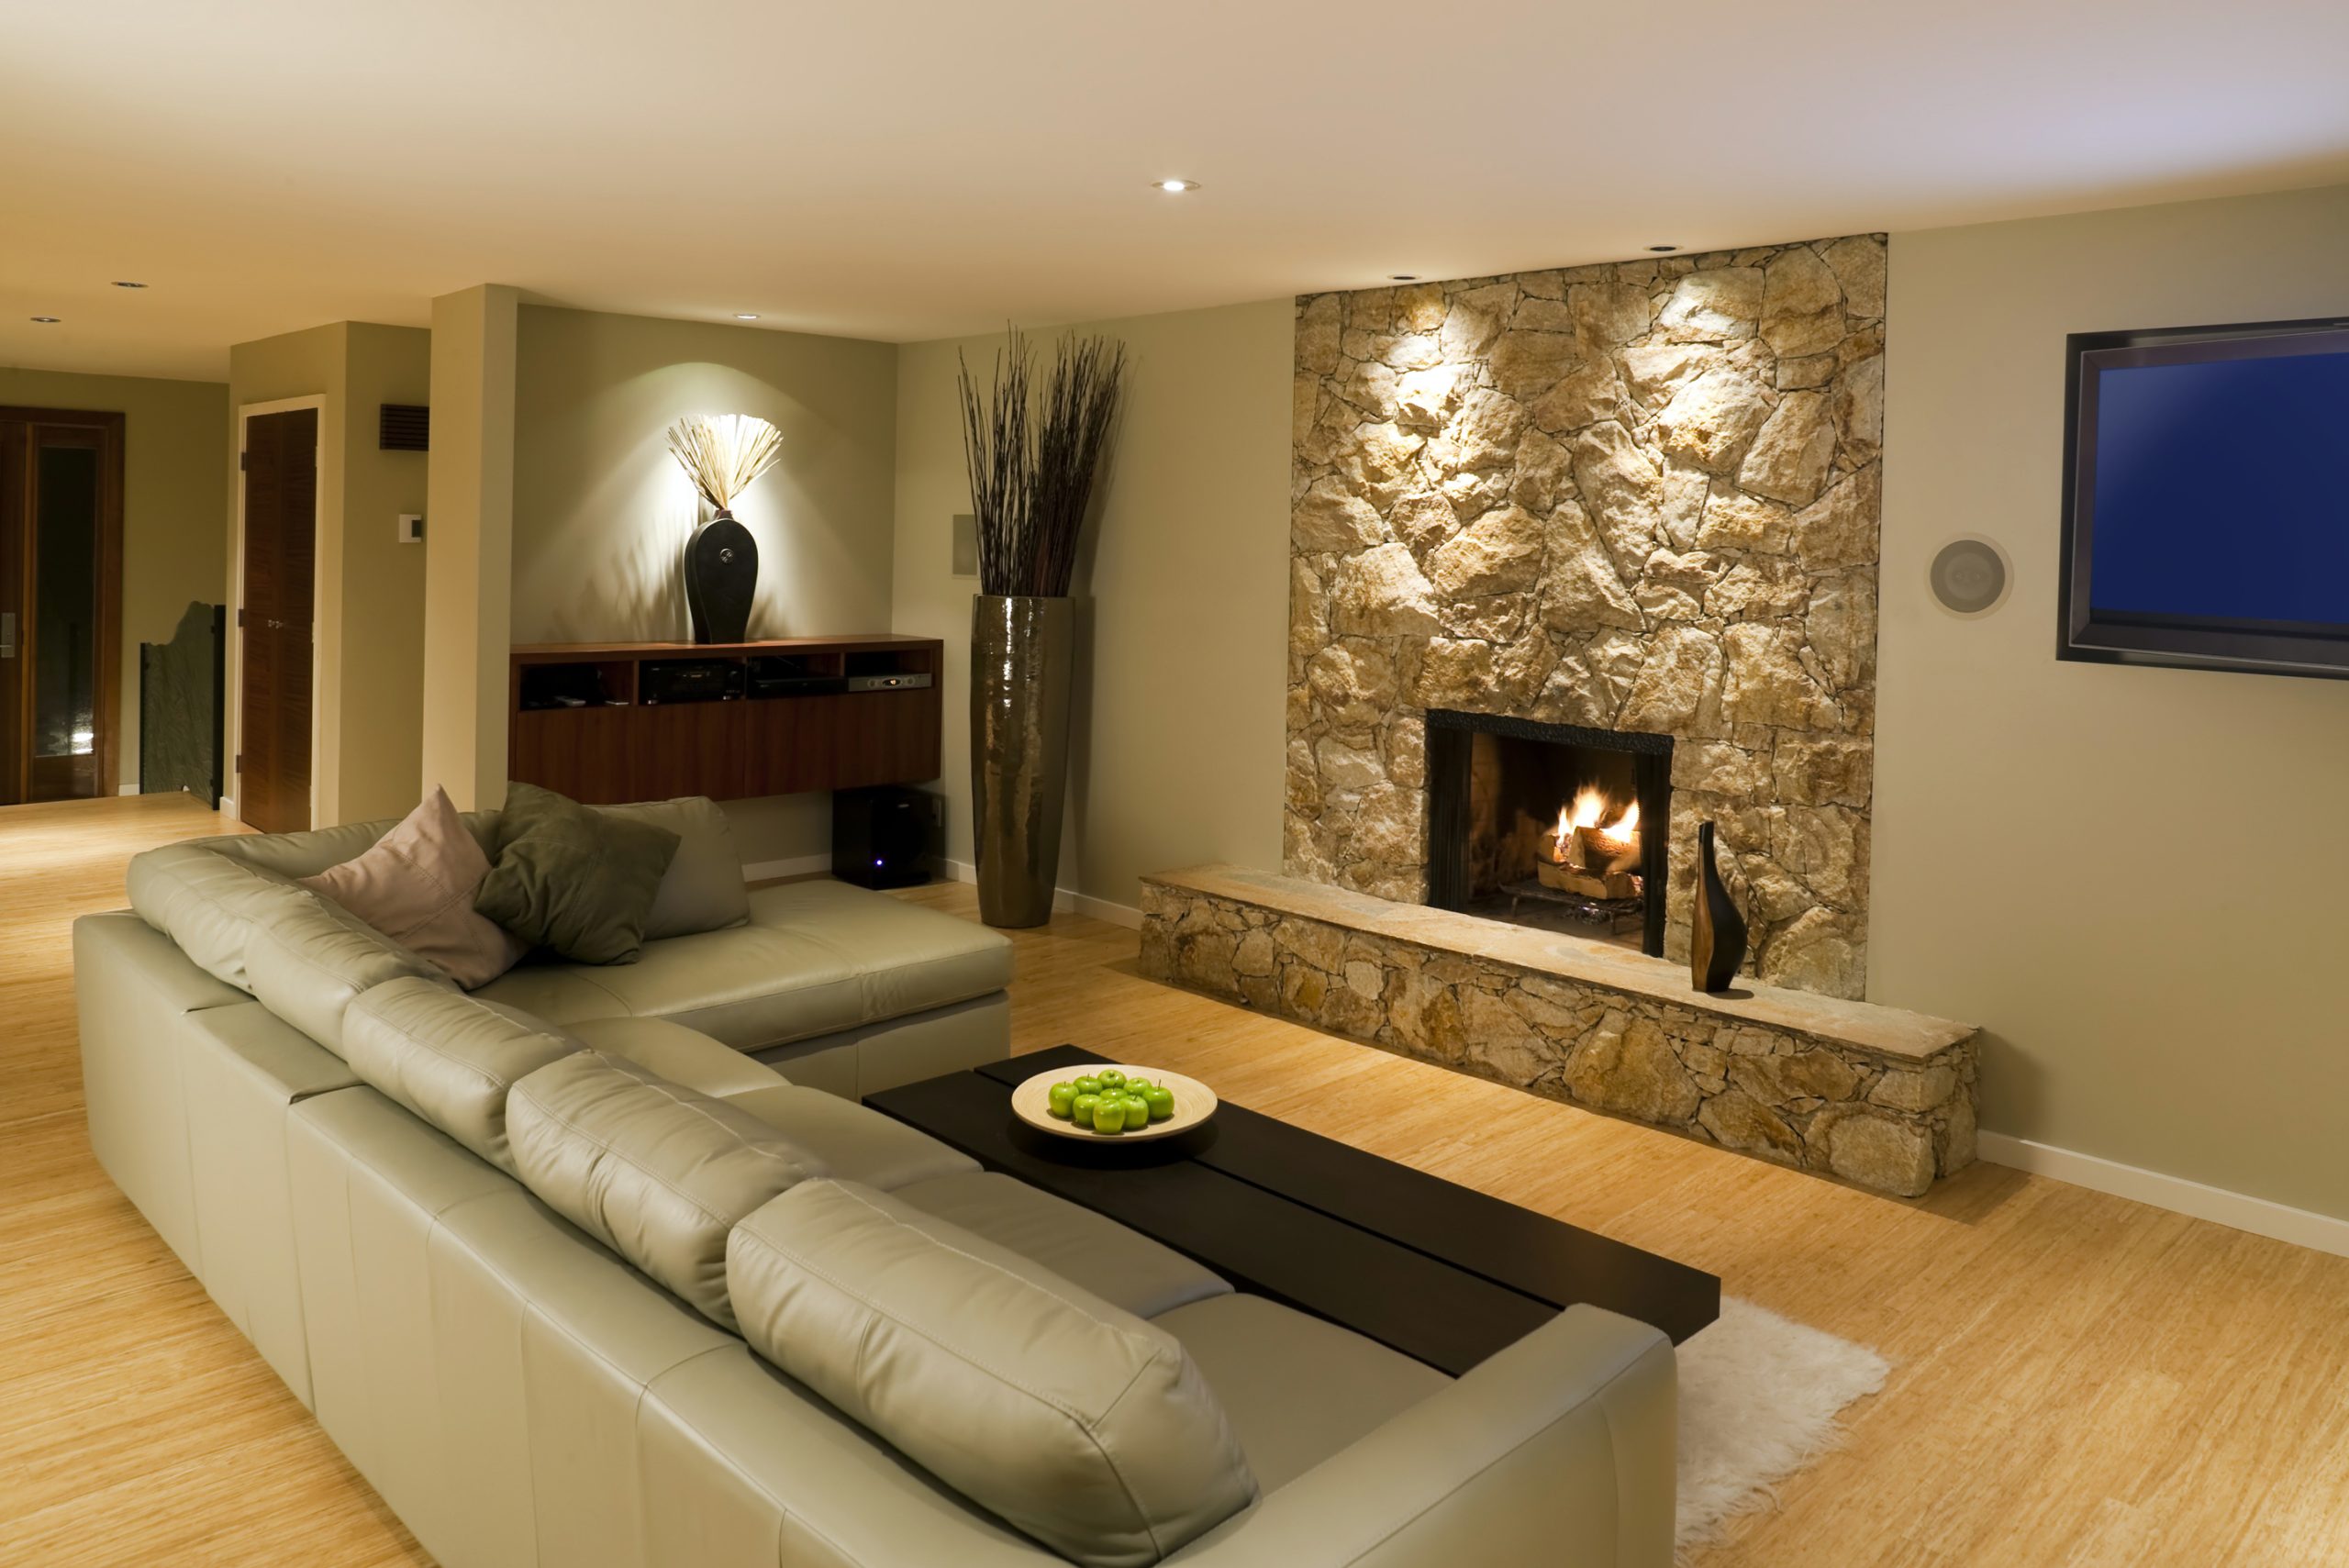 Basement living room with vinyl roll flooring